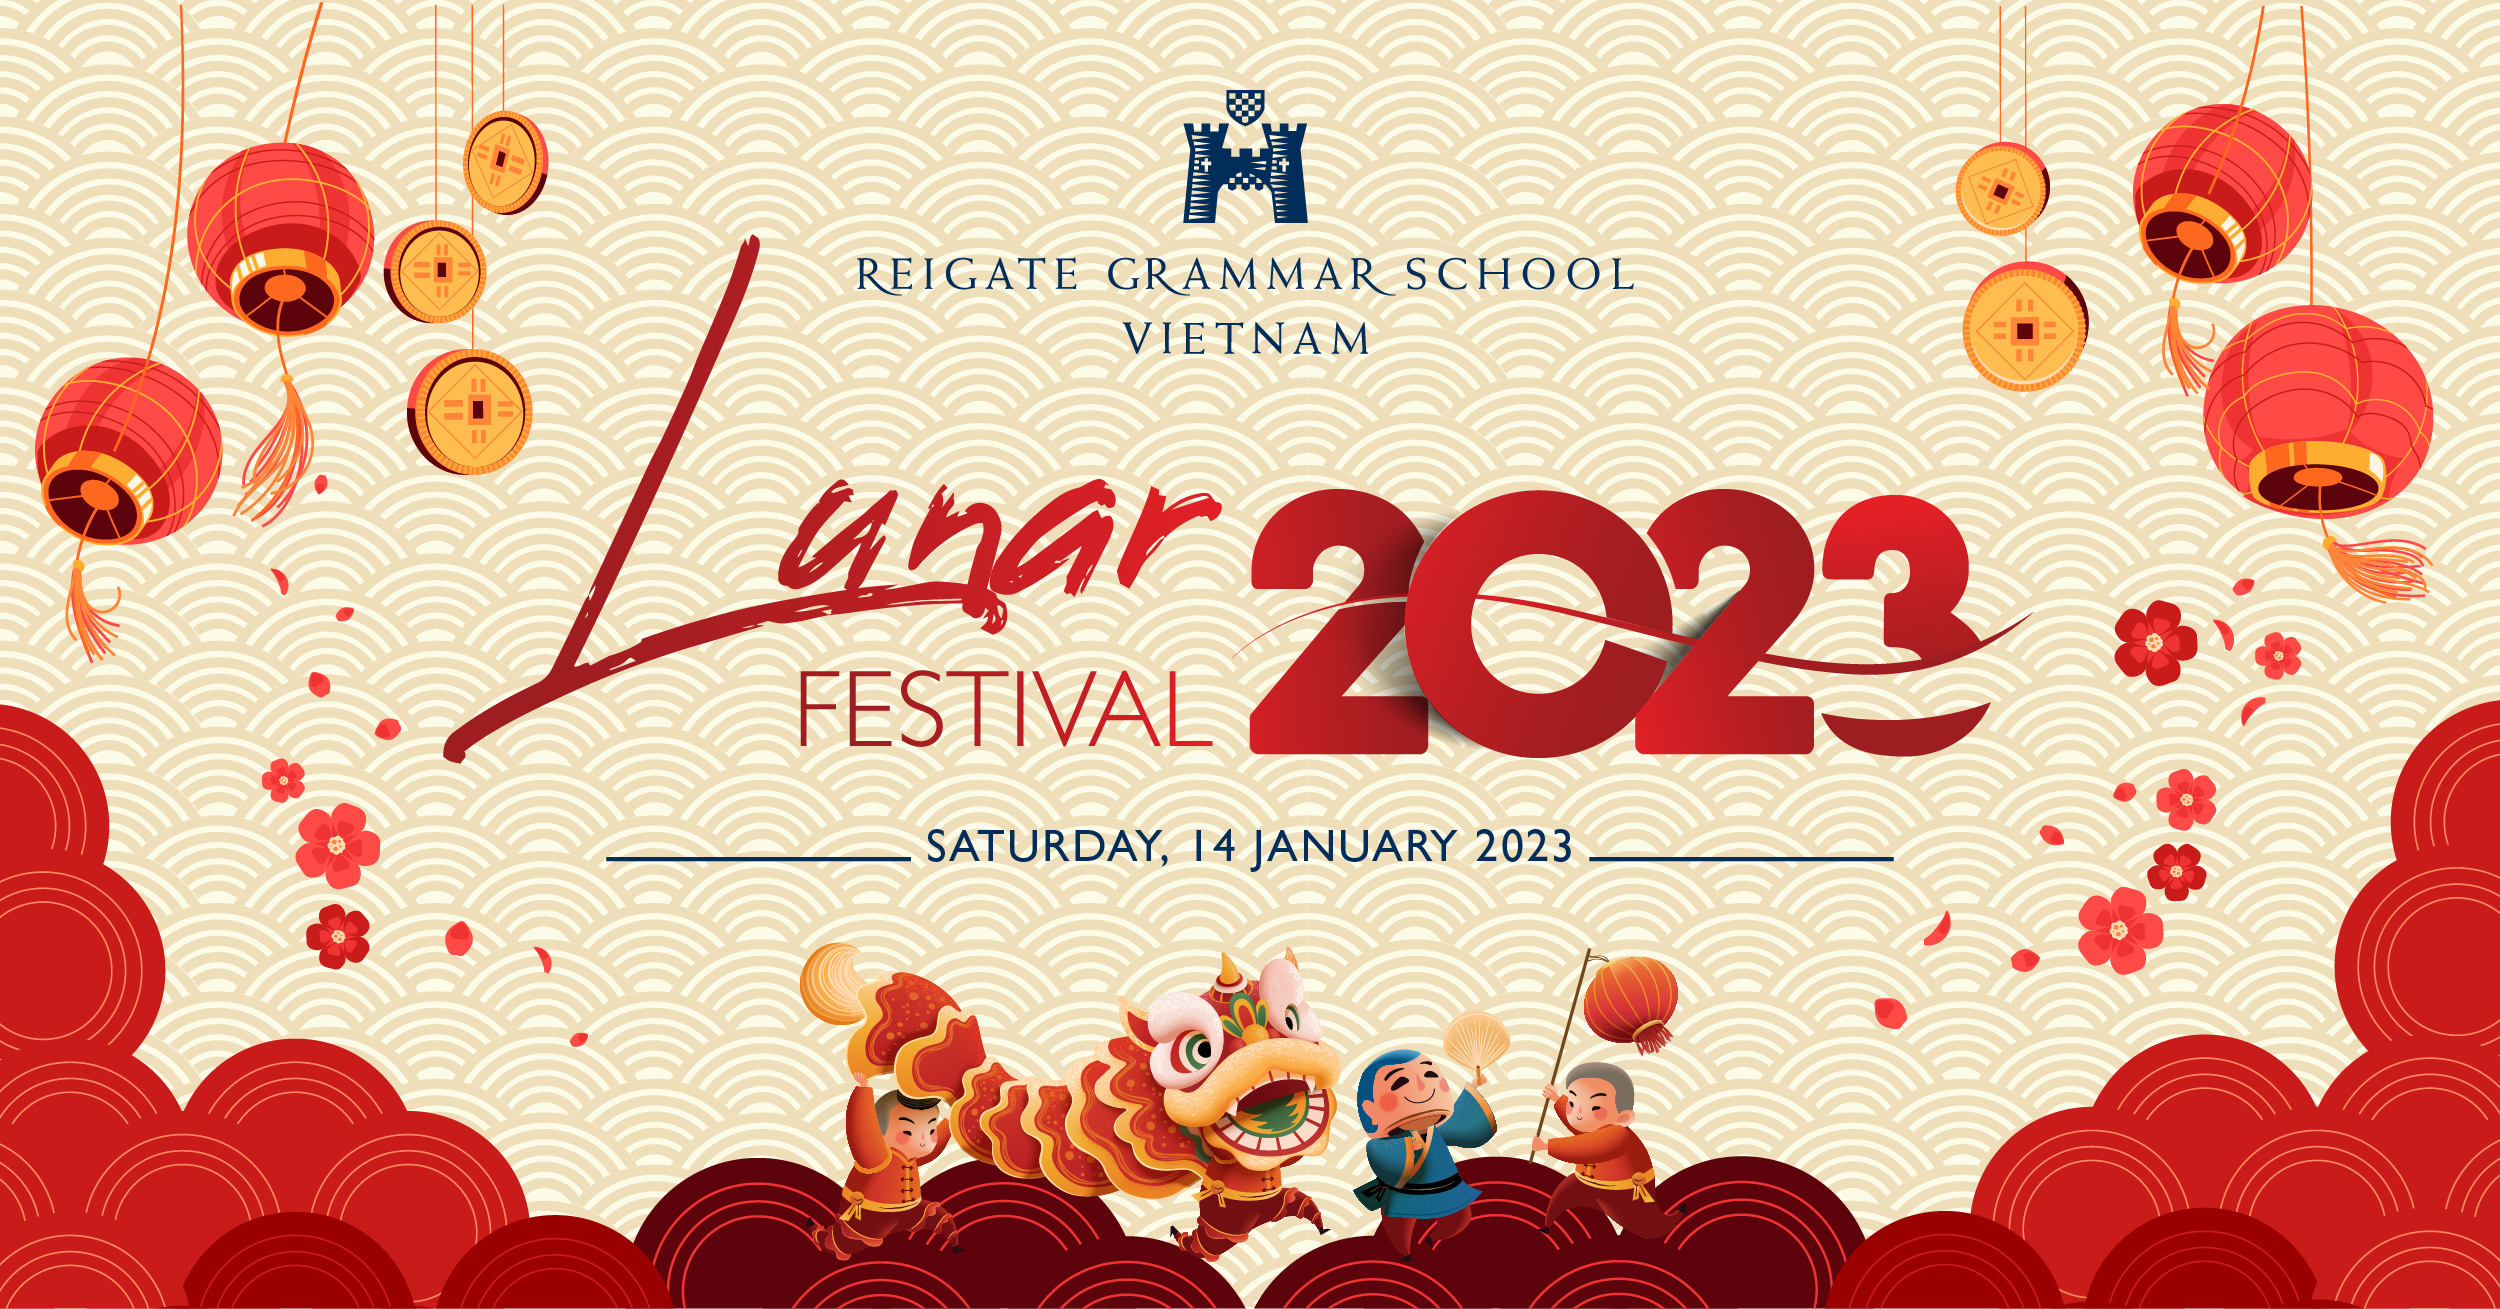 Begin a joyful 2023 with RGS Vietnam Lunar Festival!